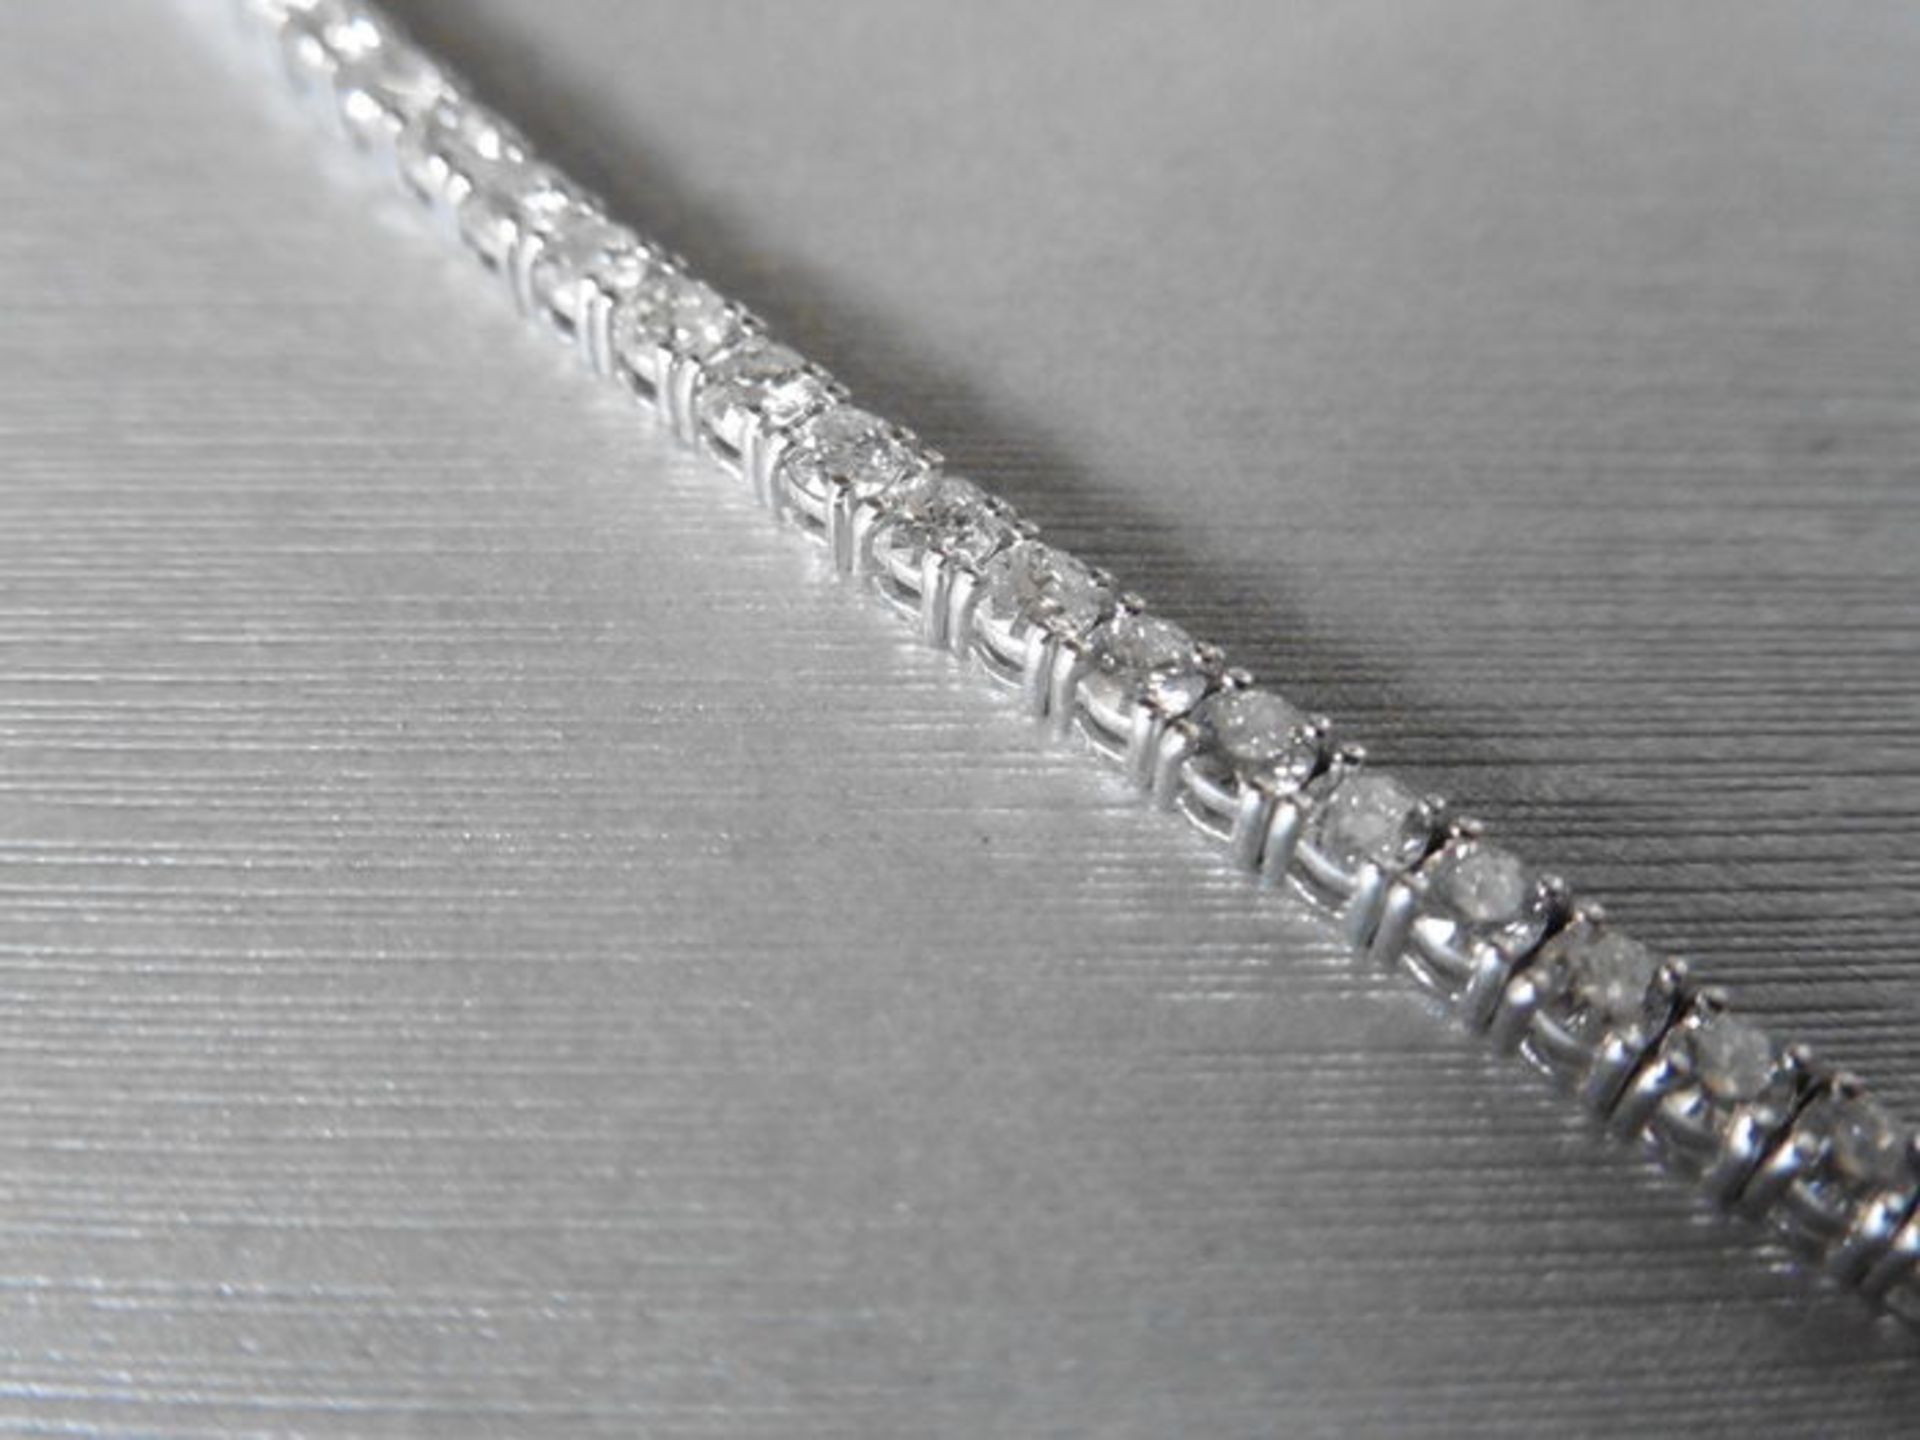 5.00Ct Diamond Tennis Bracelet Set With Brilliant Cut Diamonds Of H Colour, Si3 Clarity. - Image 3 of 3